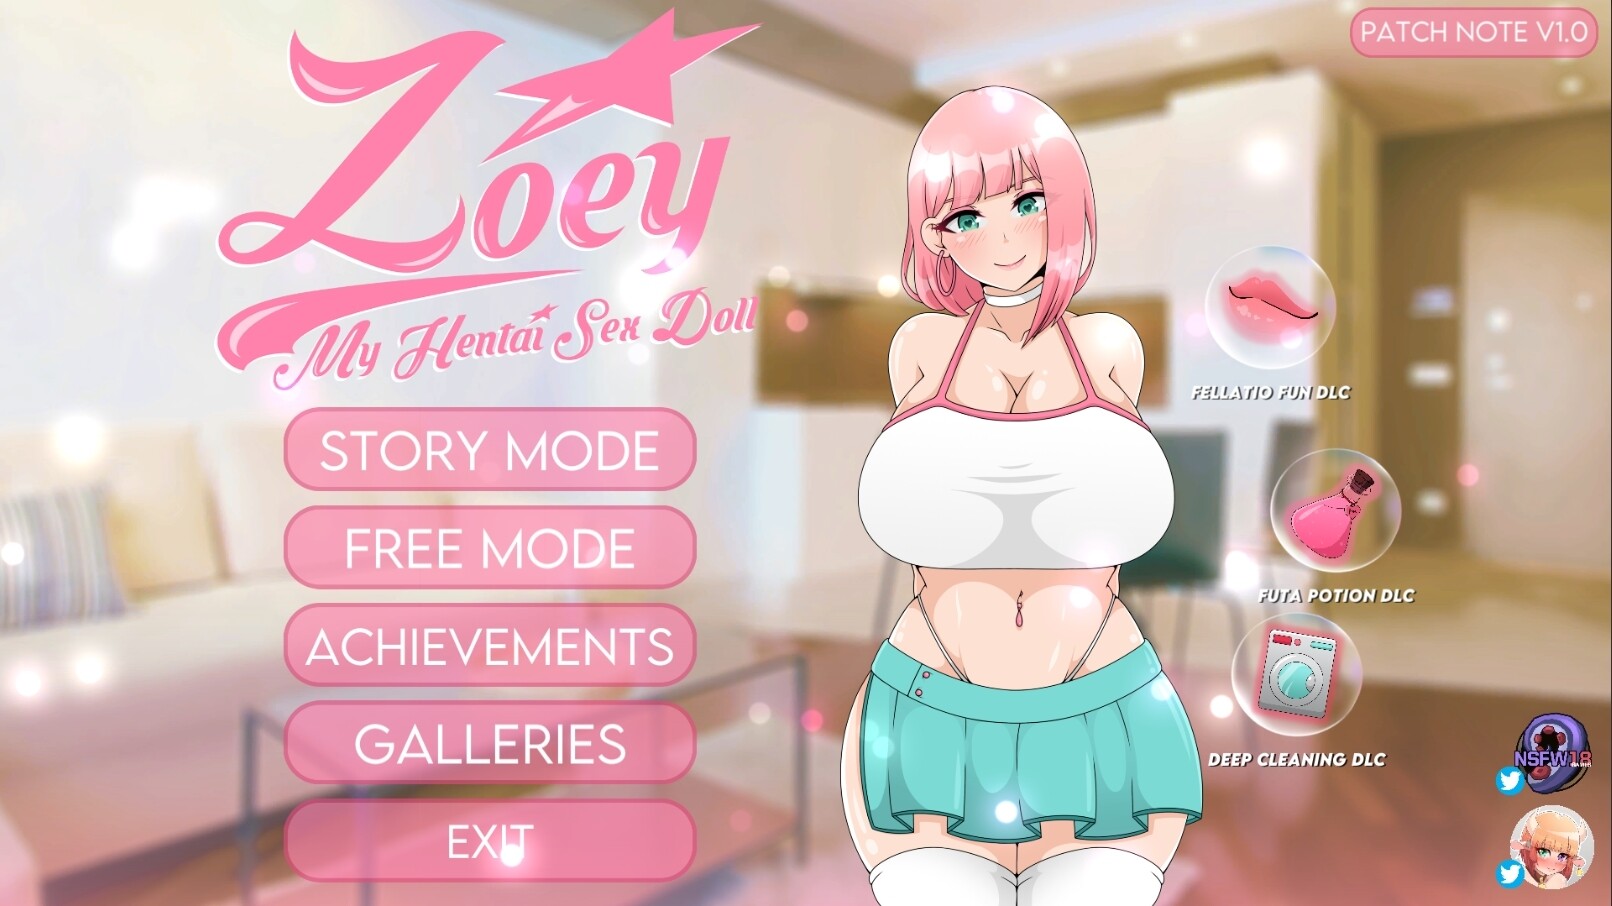 Zoey My Hentai Sex Doll on Steam